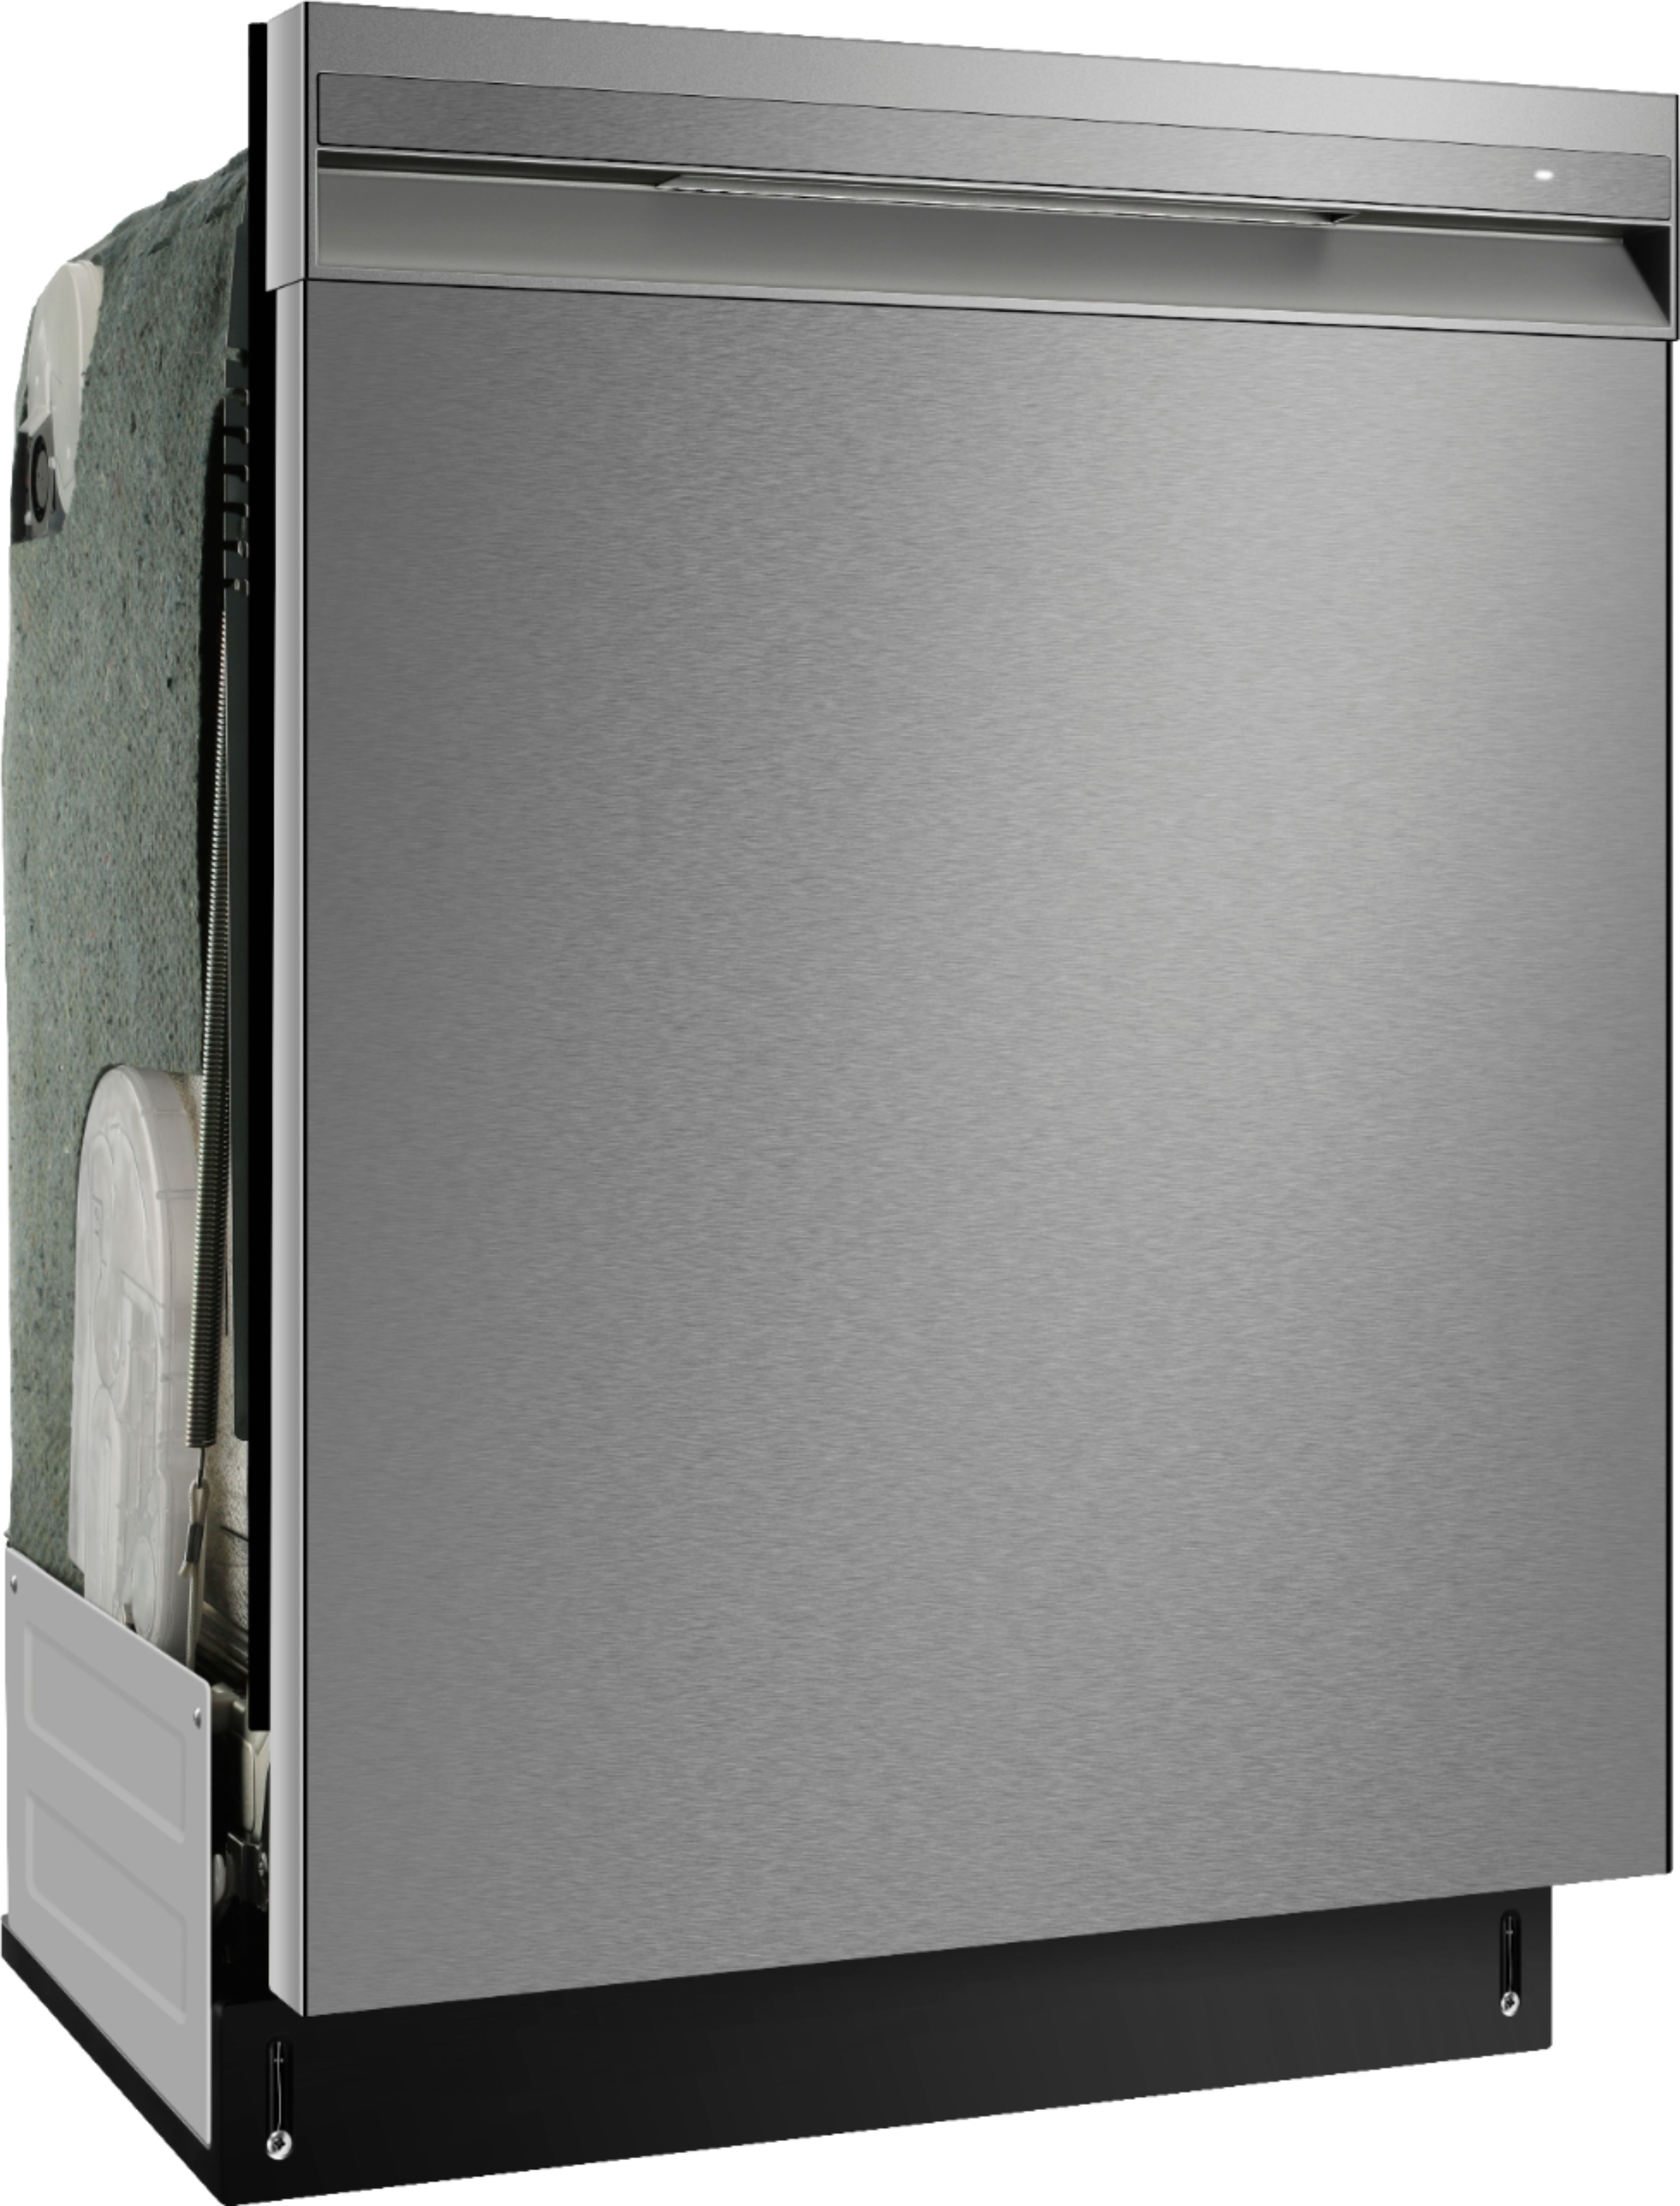 Angle View: Fisher & Paykel - 24" ADA Single Door Dishwasher 3 racks - Custom Panel Ready - Custom Panel Ready